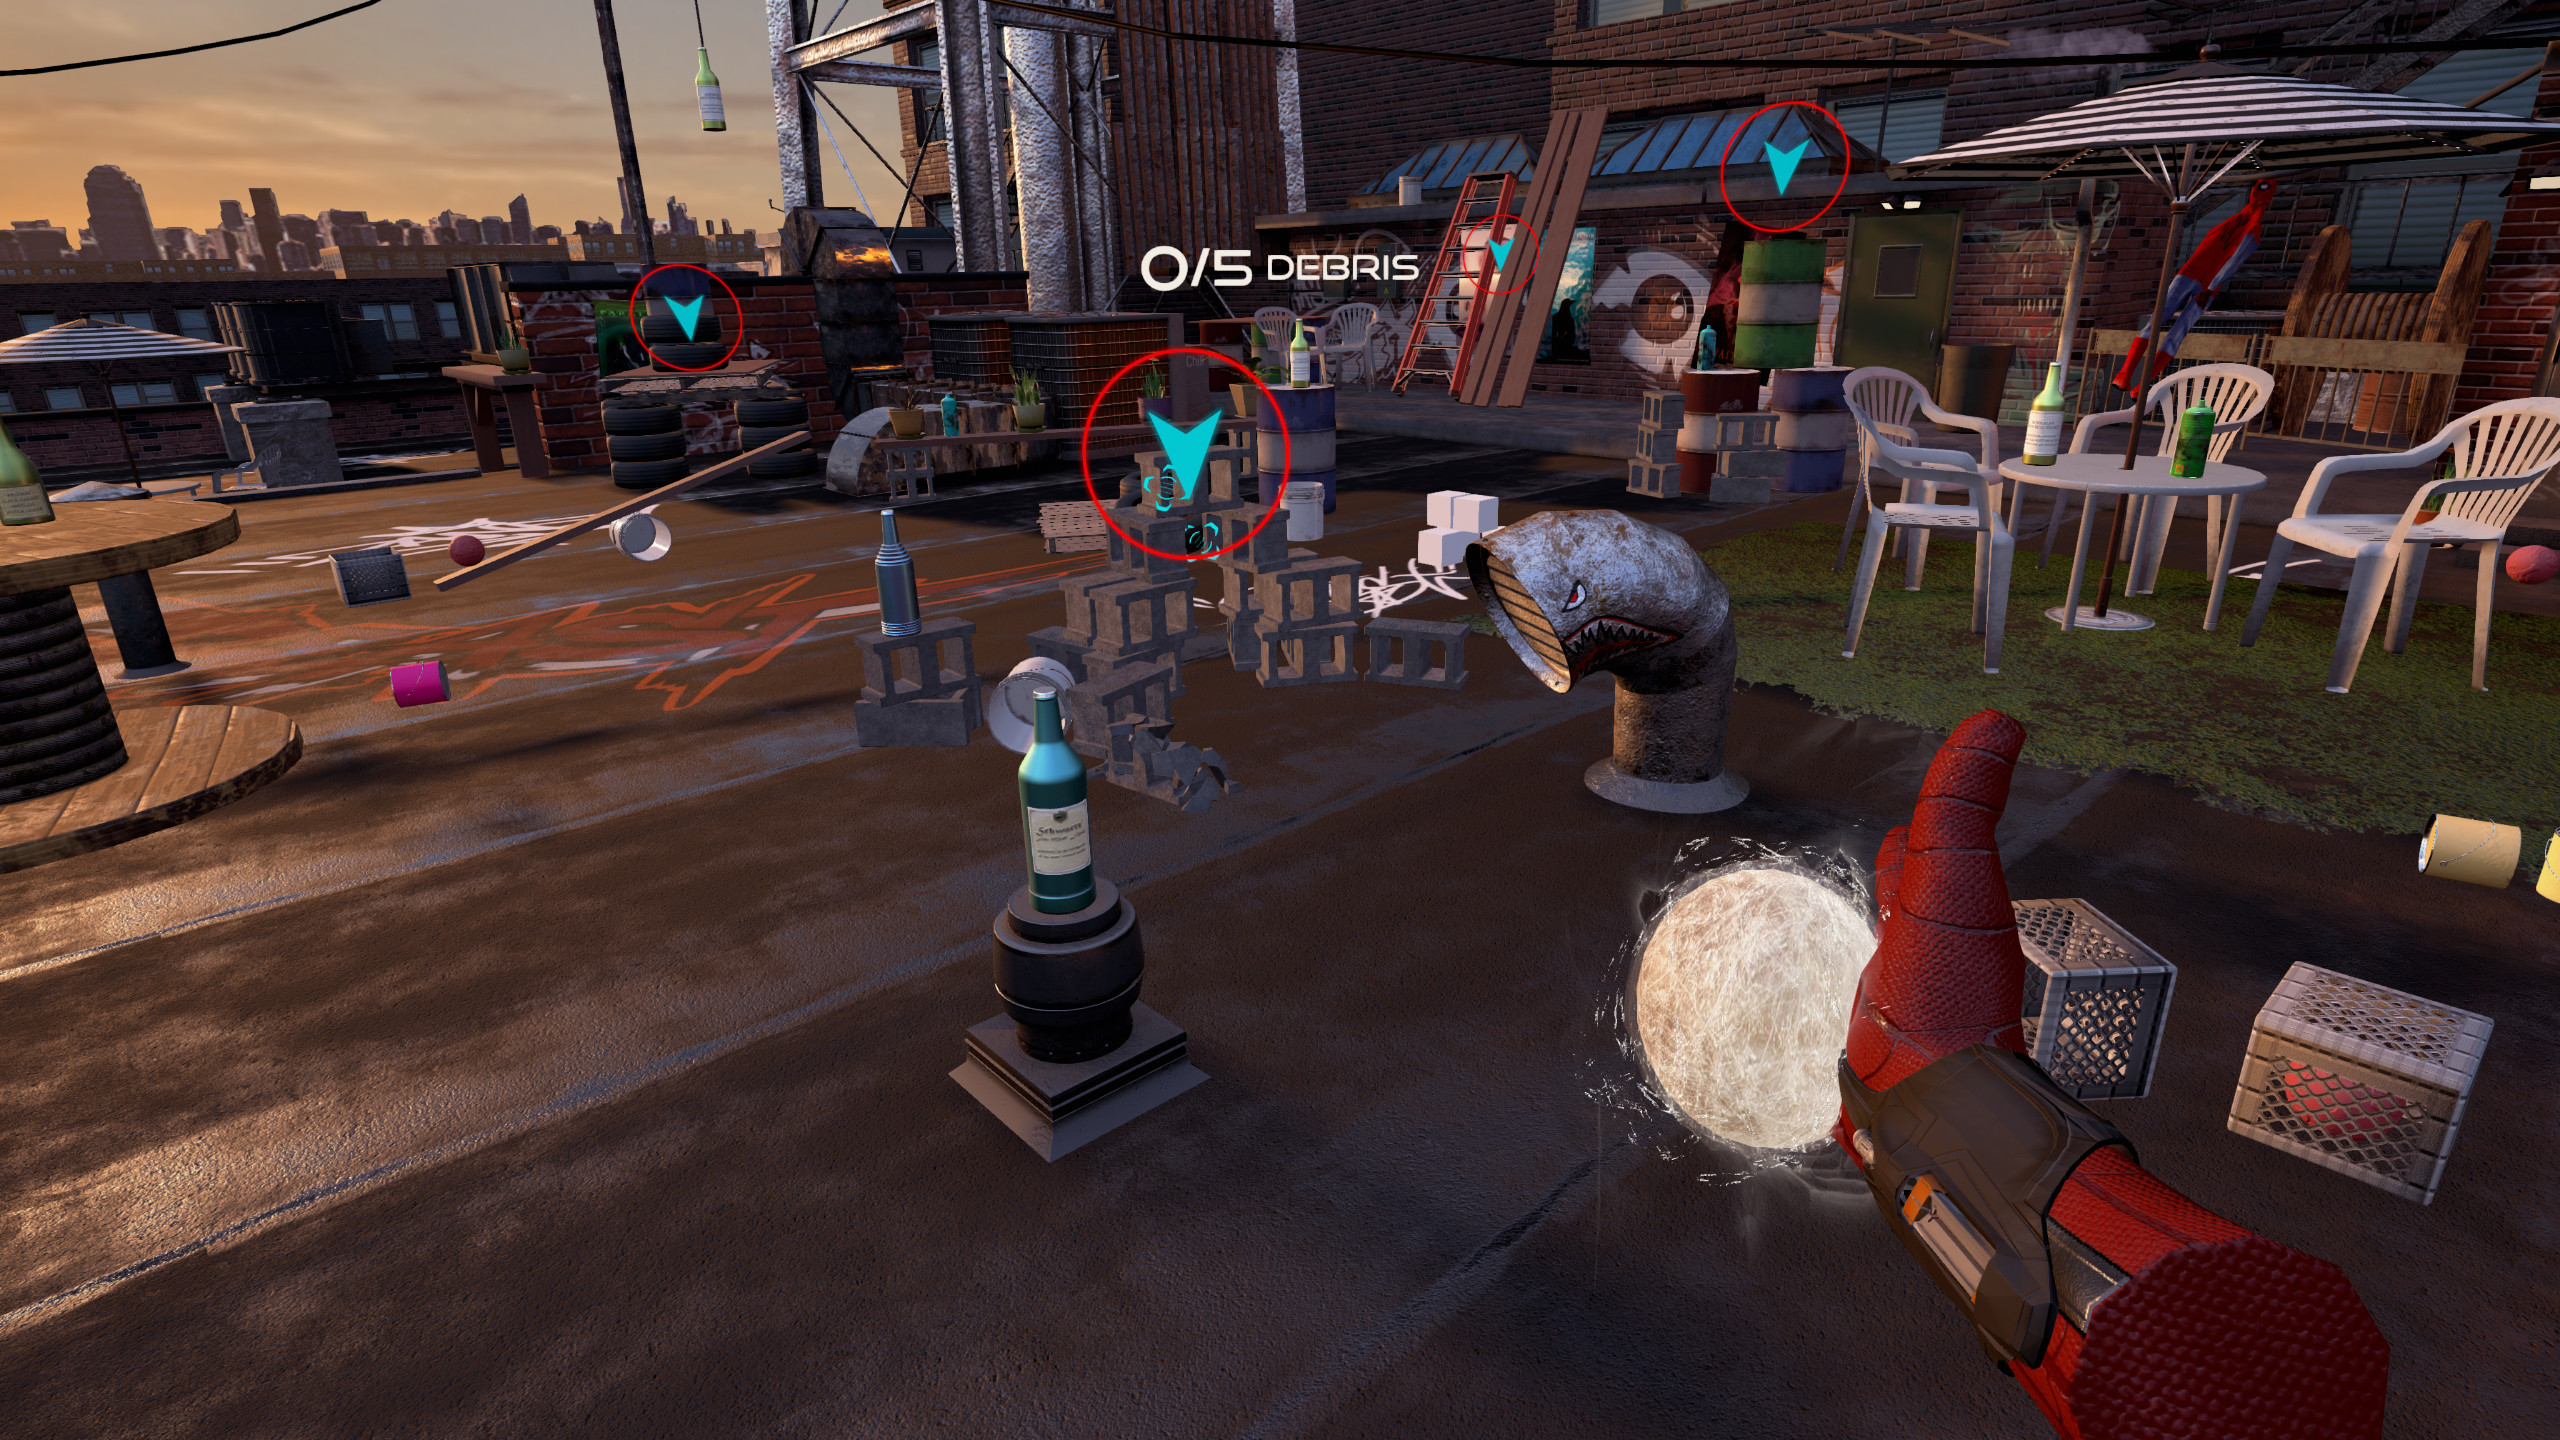 Spider-Man: Homecoming - Virtual Reality Experience screenshot